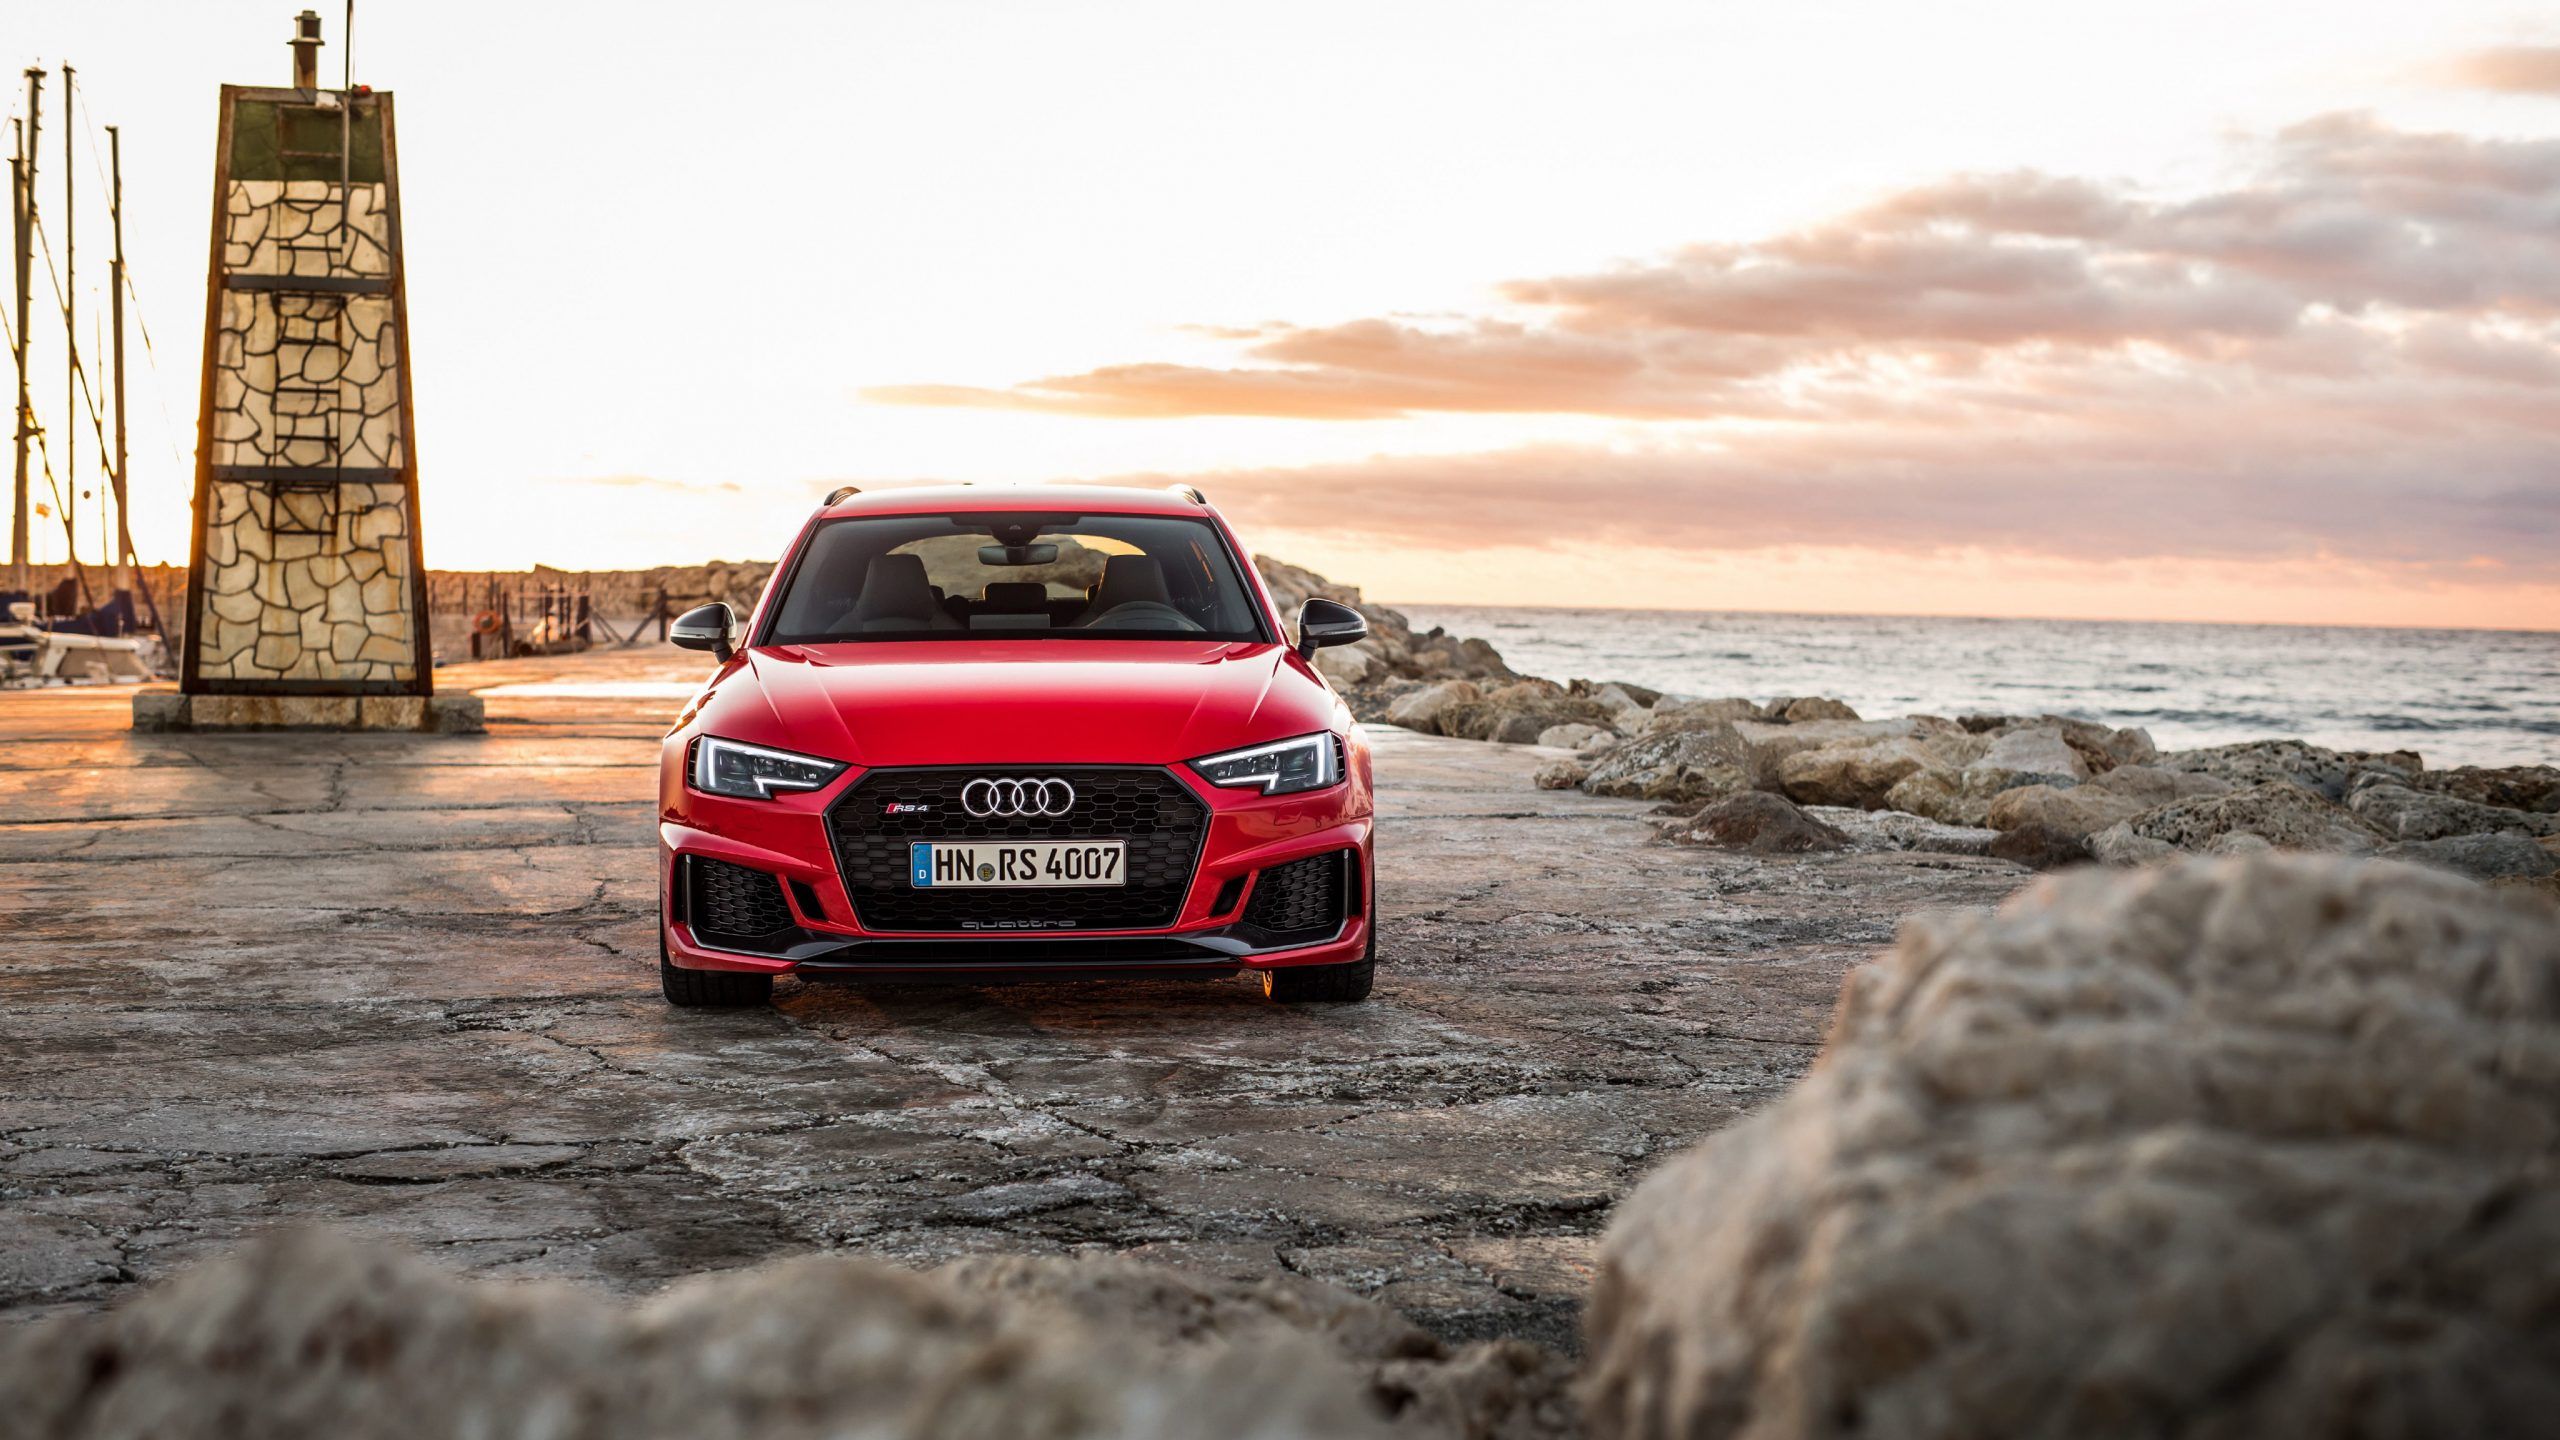 Audi Hintergrundbild 2560x1440. Audi RS4 Avant Wallpaper